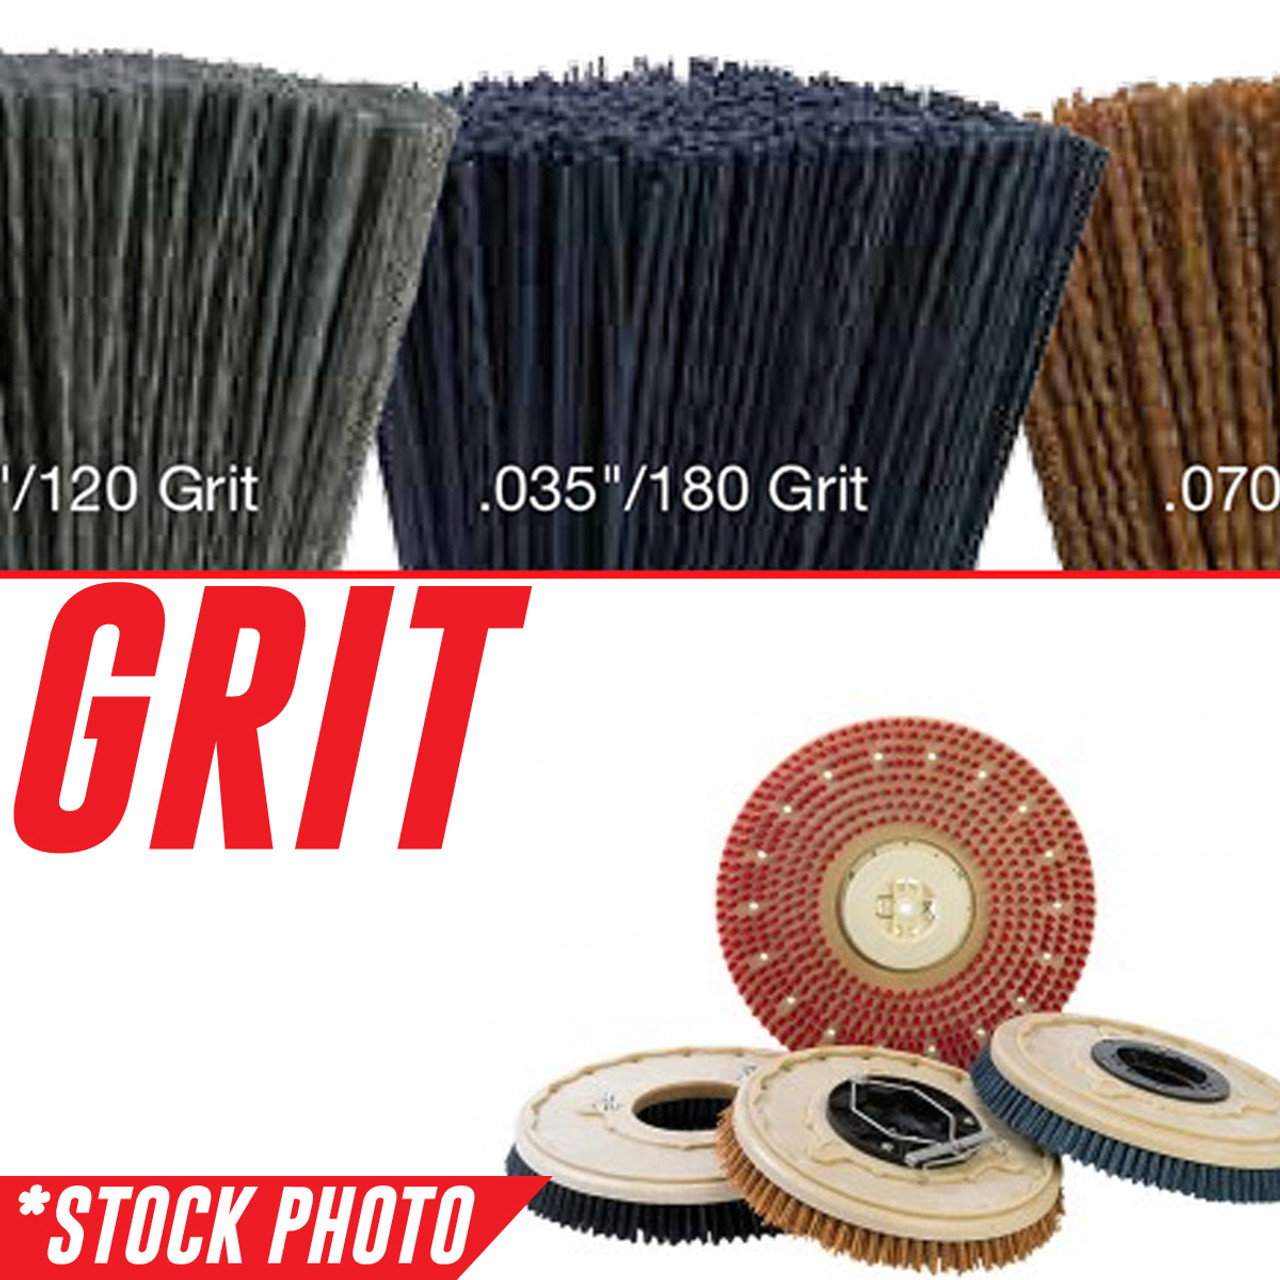 19" Rotary Brush .035"/180 Grit fits International Cleaning Equipment Models i20